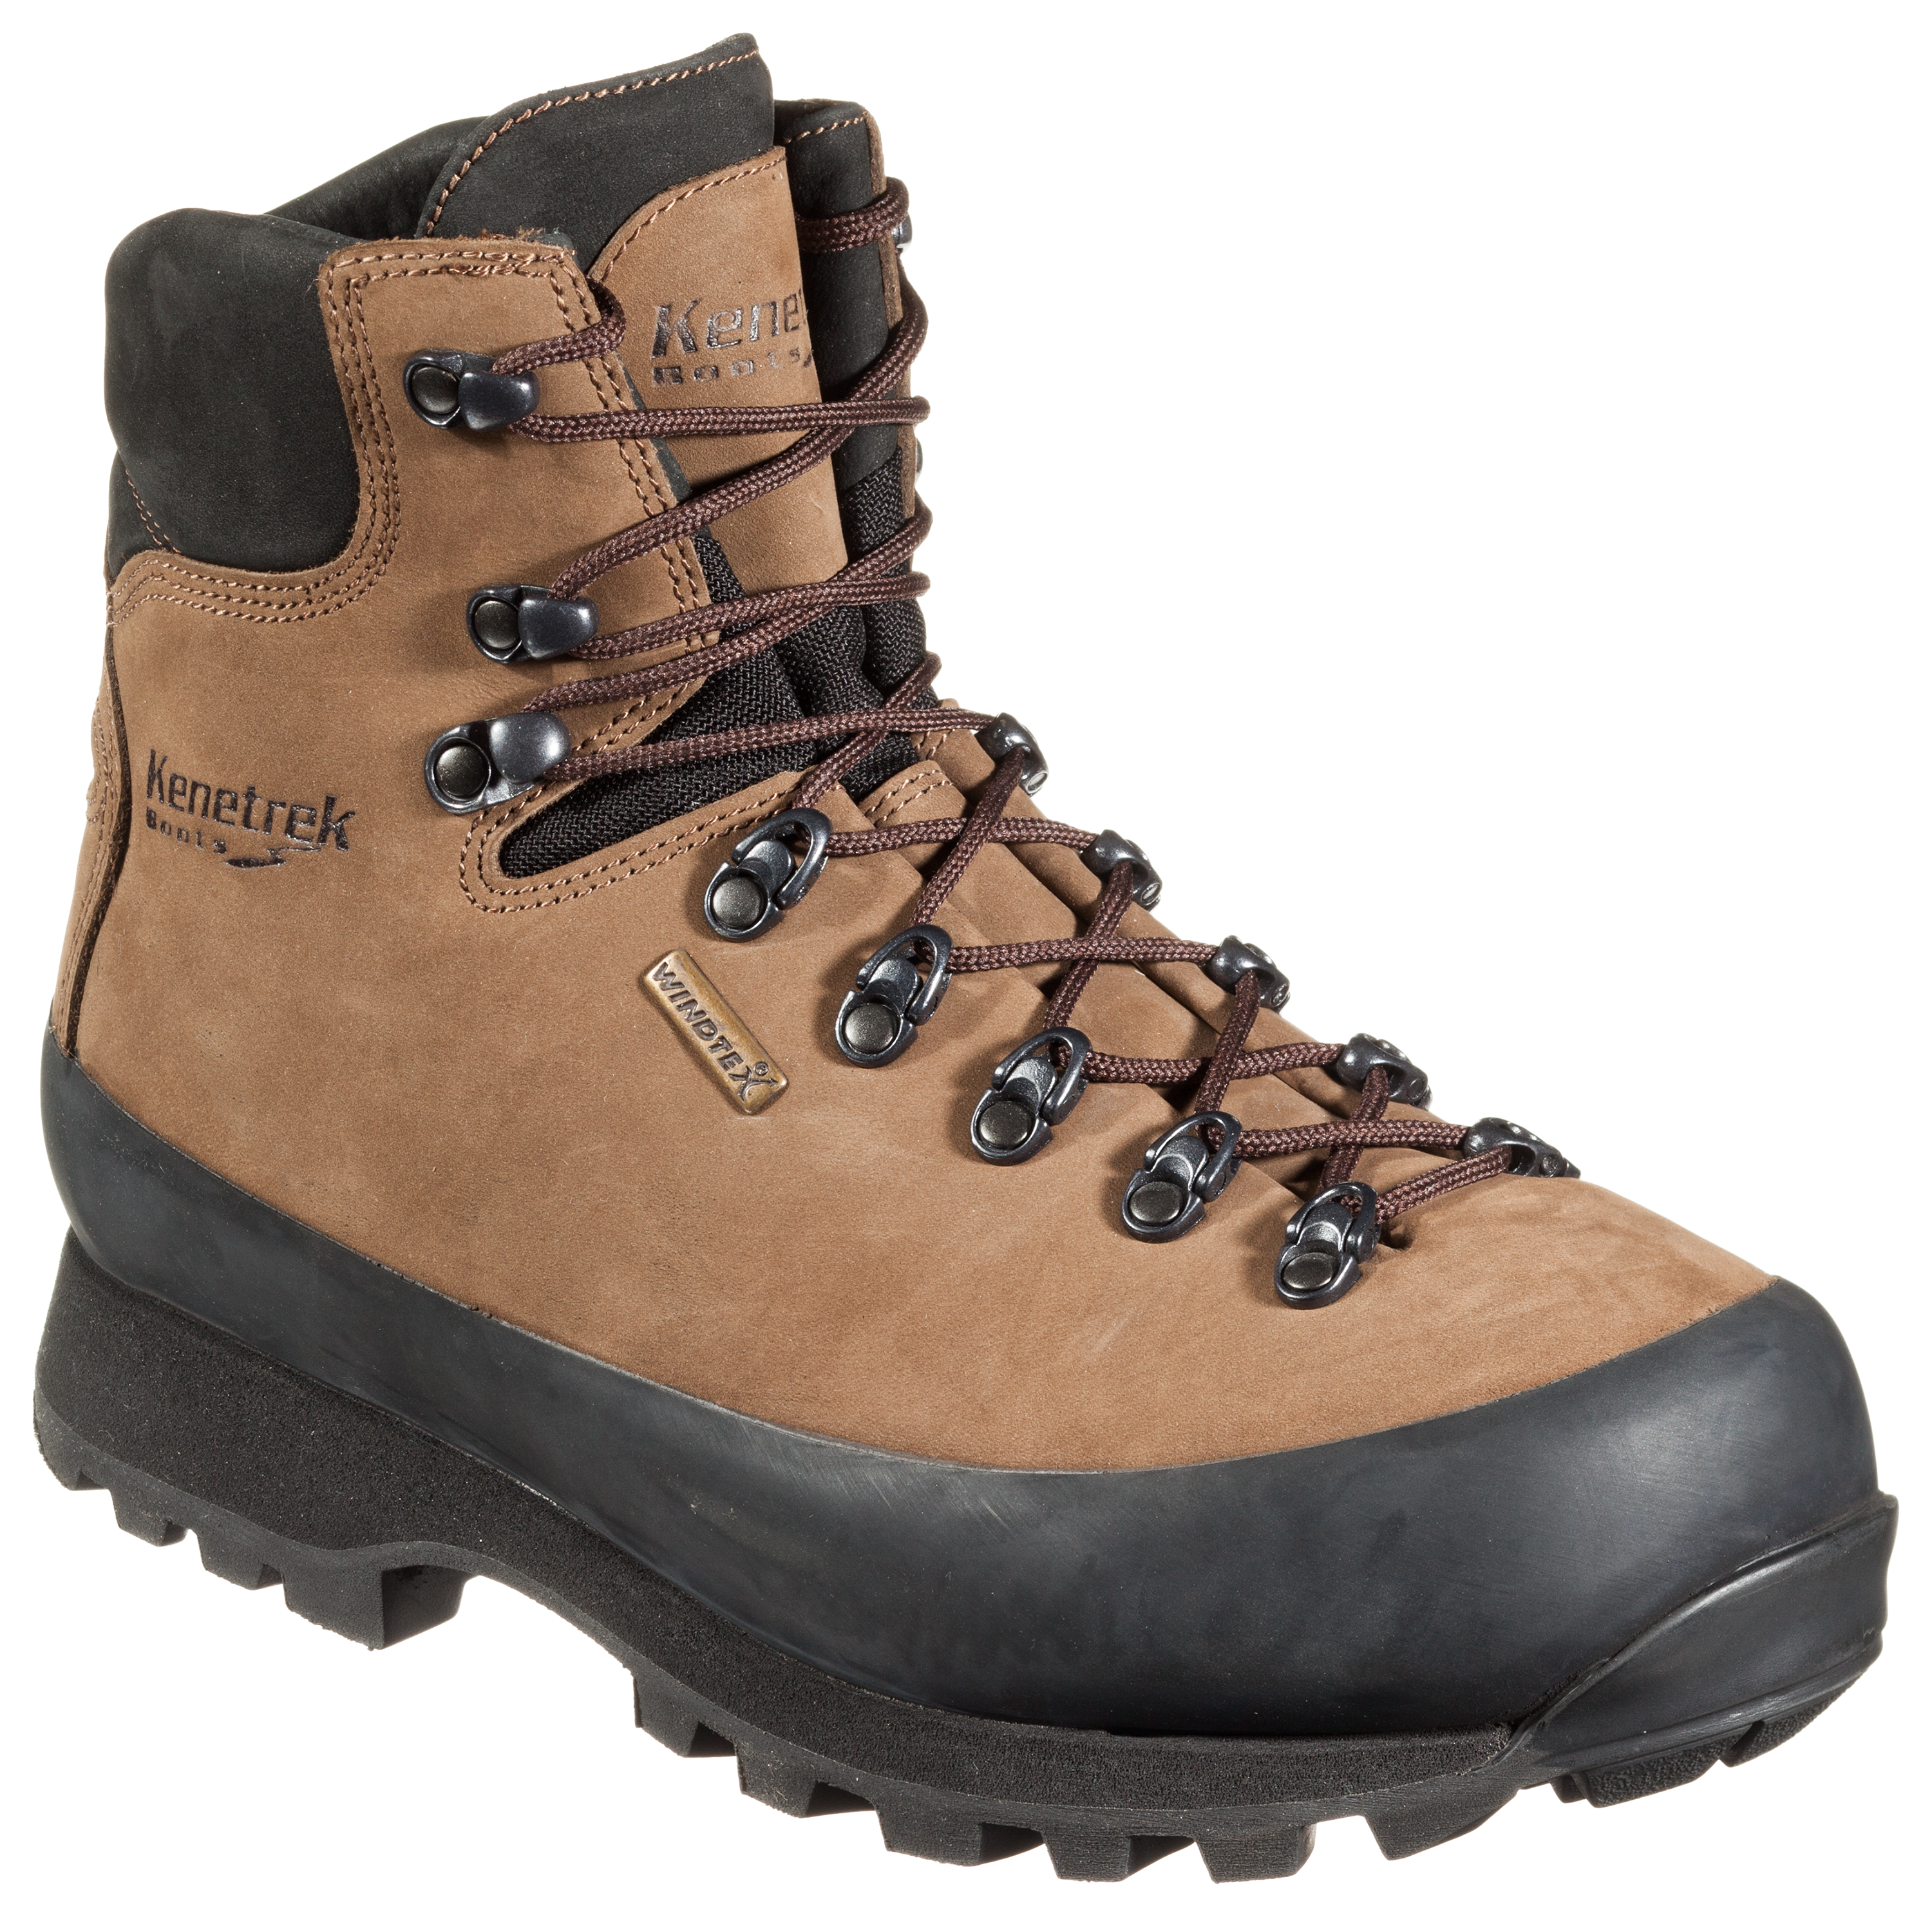 Kenetrek Hardscrabble Waterproof Hiking Boots for Men - Brown - 8.5M